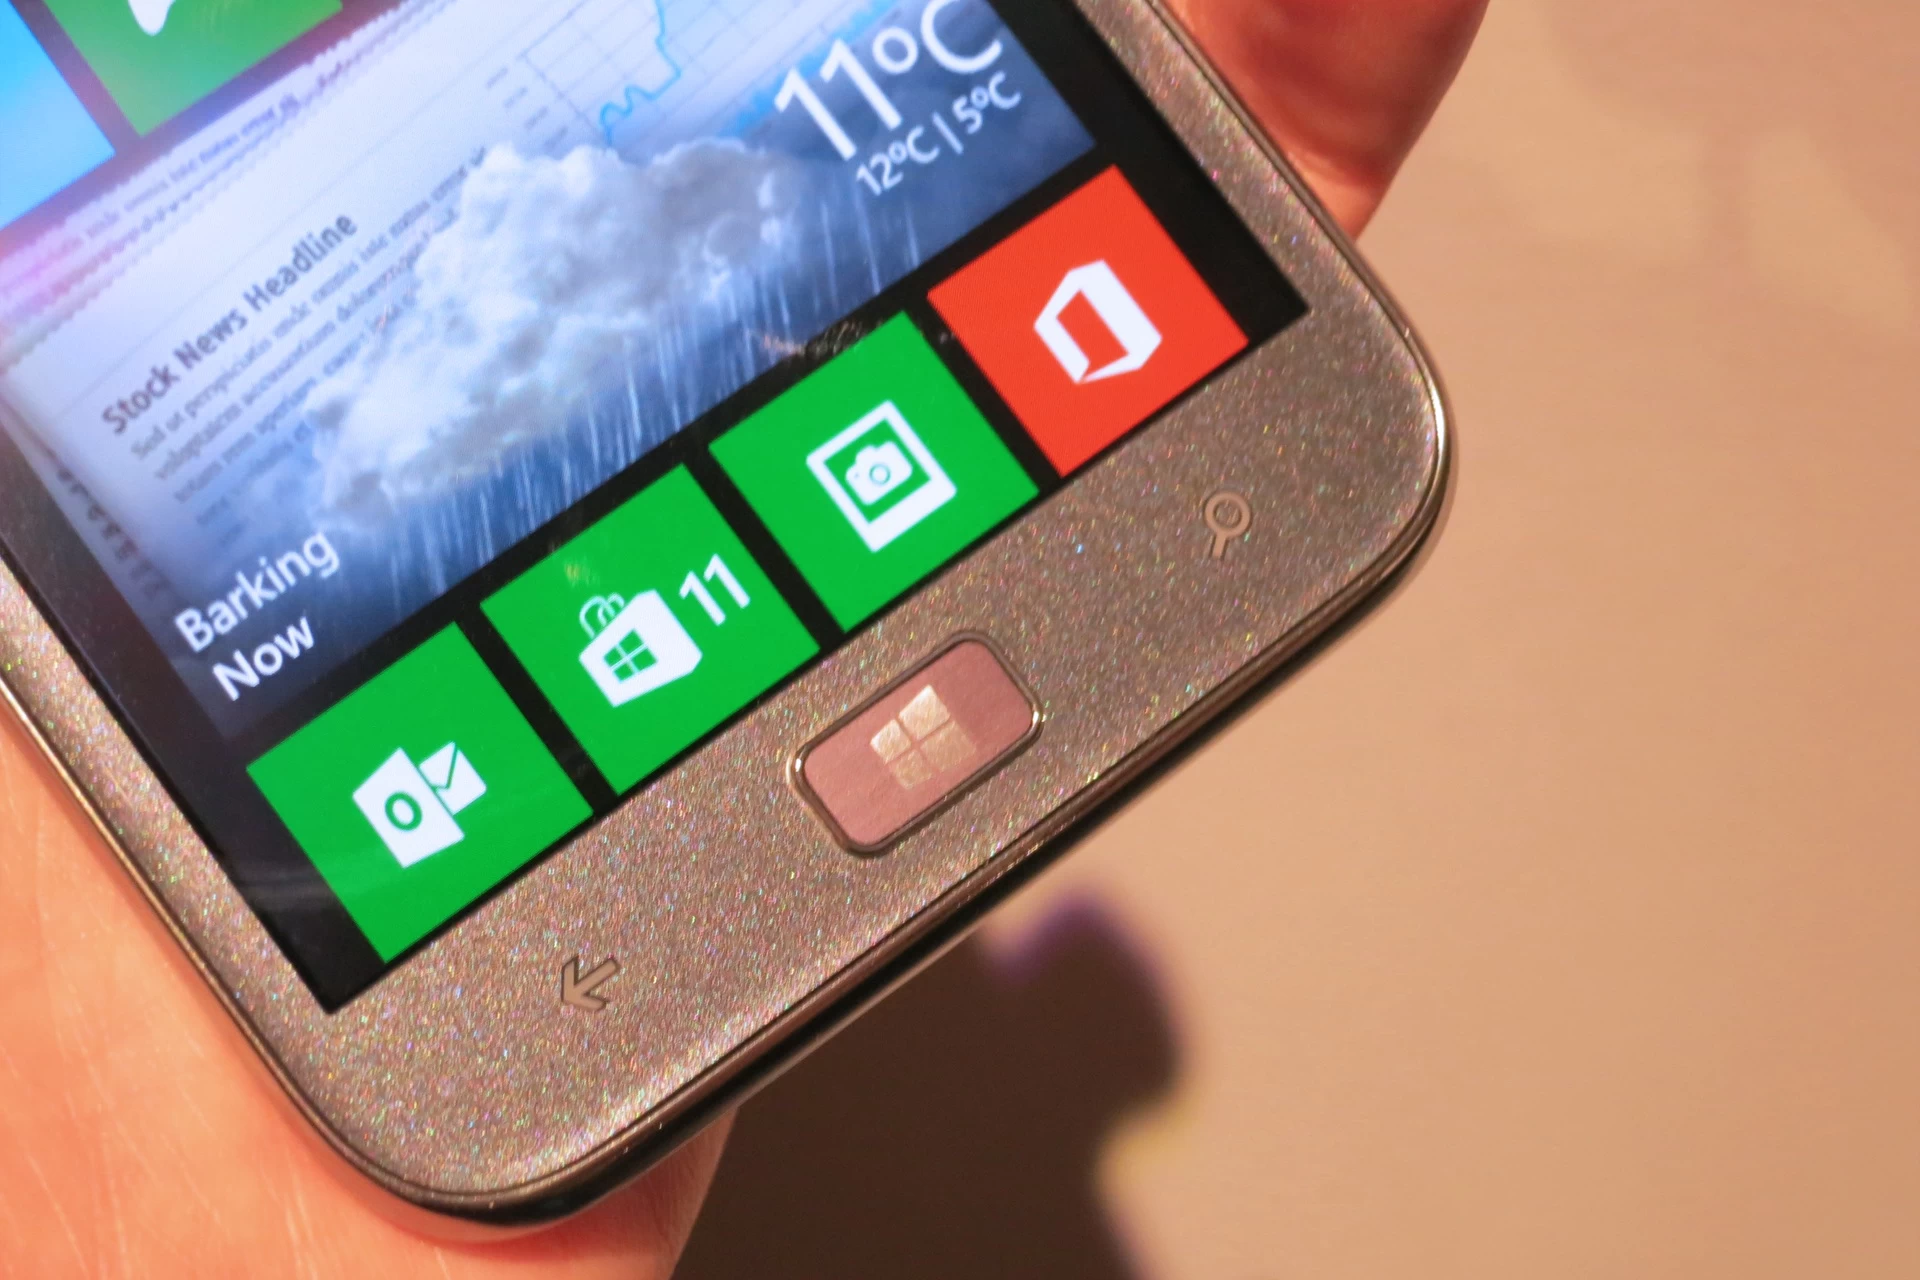 image | Ativ S | Samsung Ativ S ยังไม่ตาย ผู้ใช้ในอิตาลีกับเยอรมันยืนยันว่าได้อัพเดท Windows Phone 8.1 ทาง OTA แล้ว